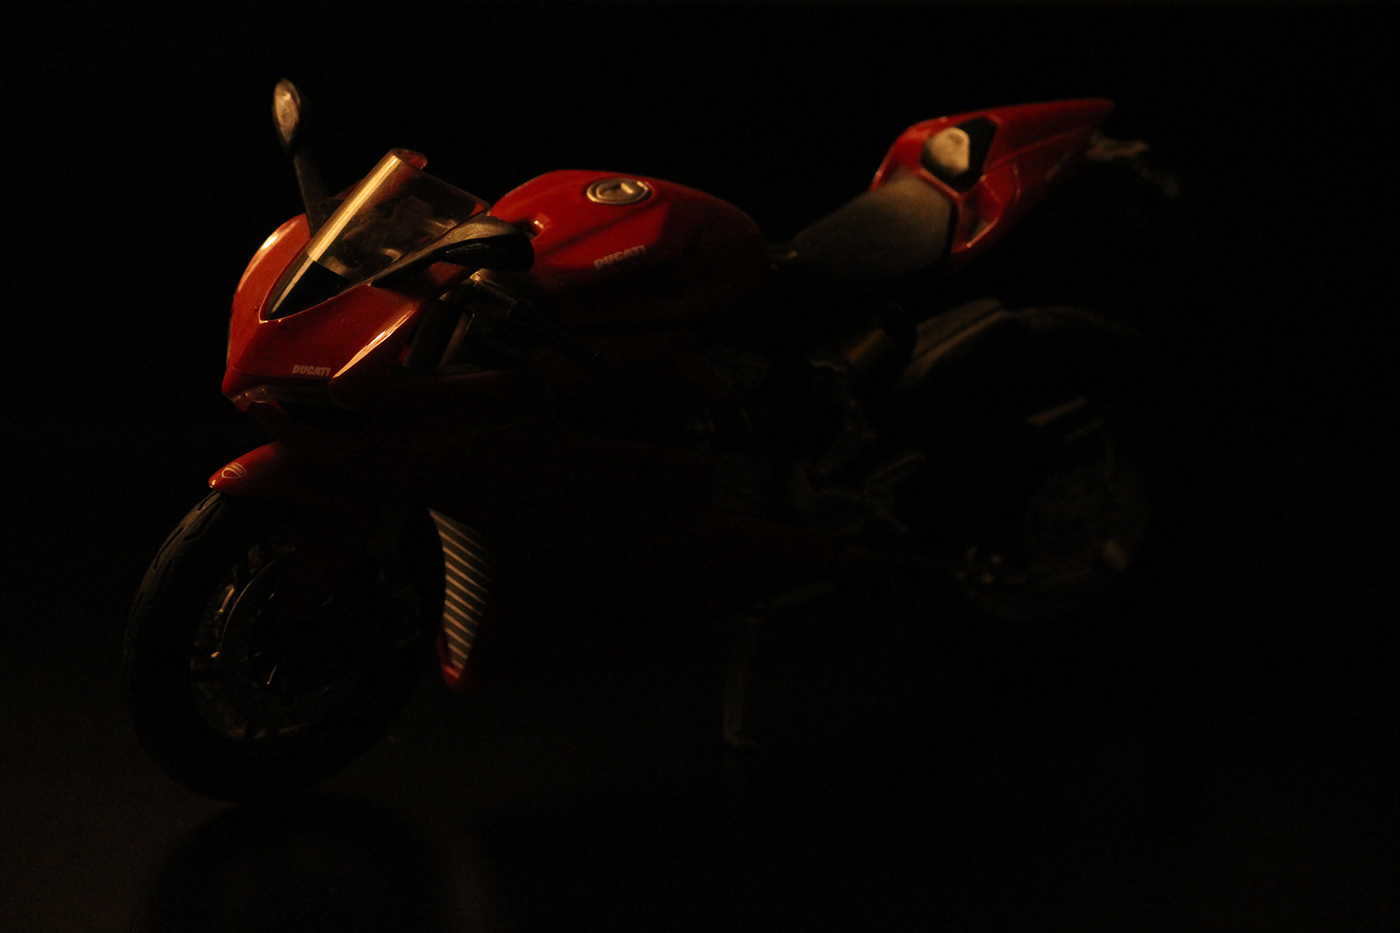 moto-photography motorcycles Ducati panigale multistrada diavel